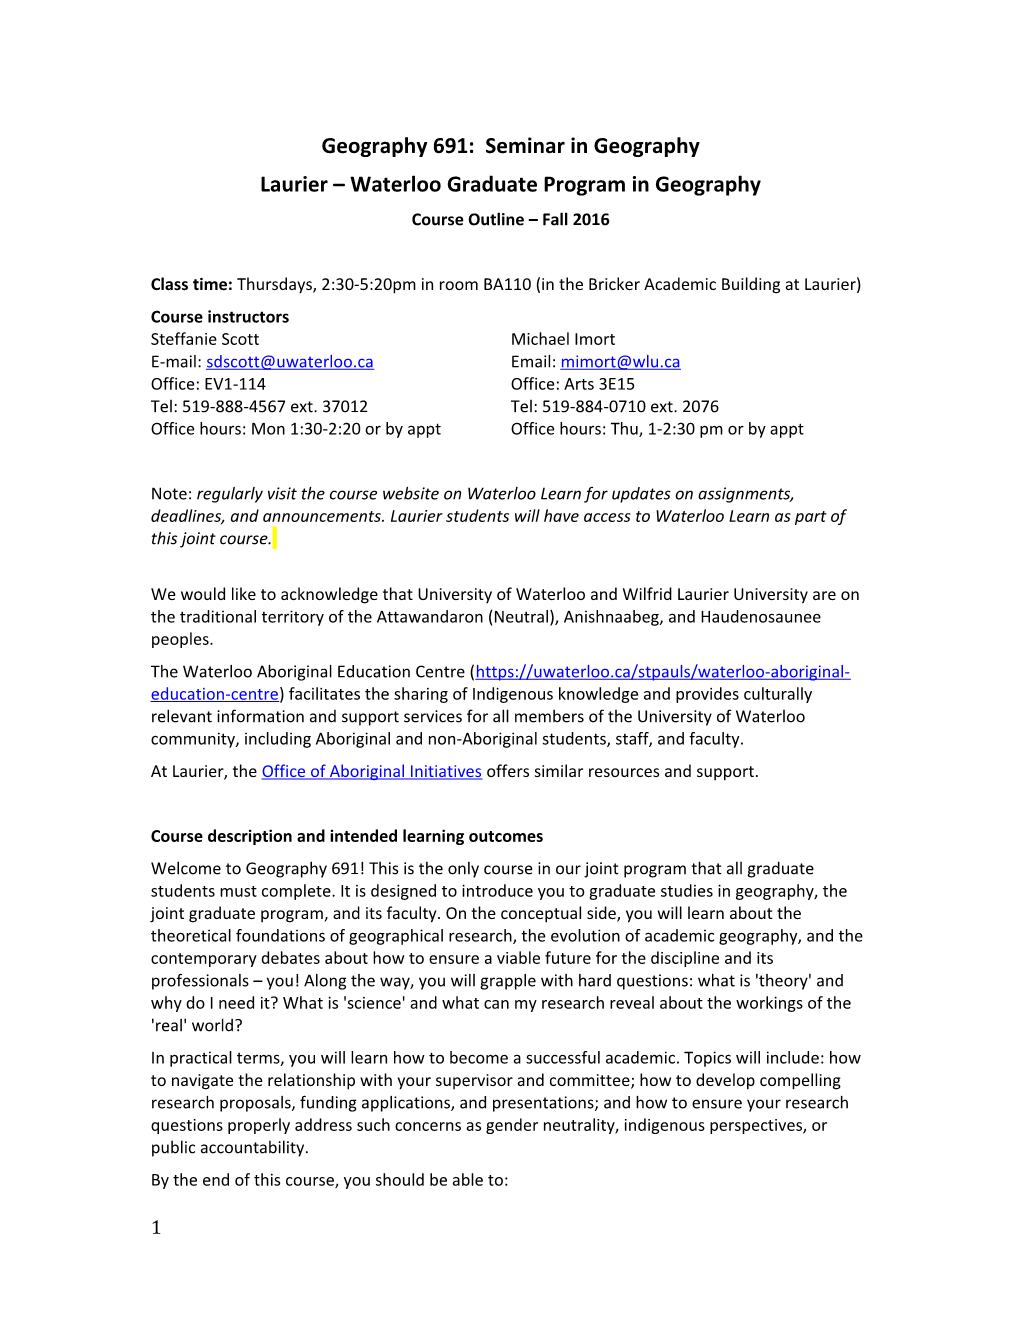 Laurier Waterloo Graduate Program in Geography